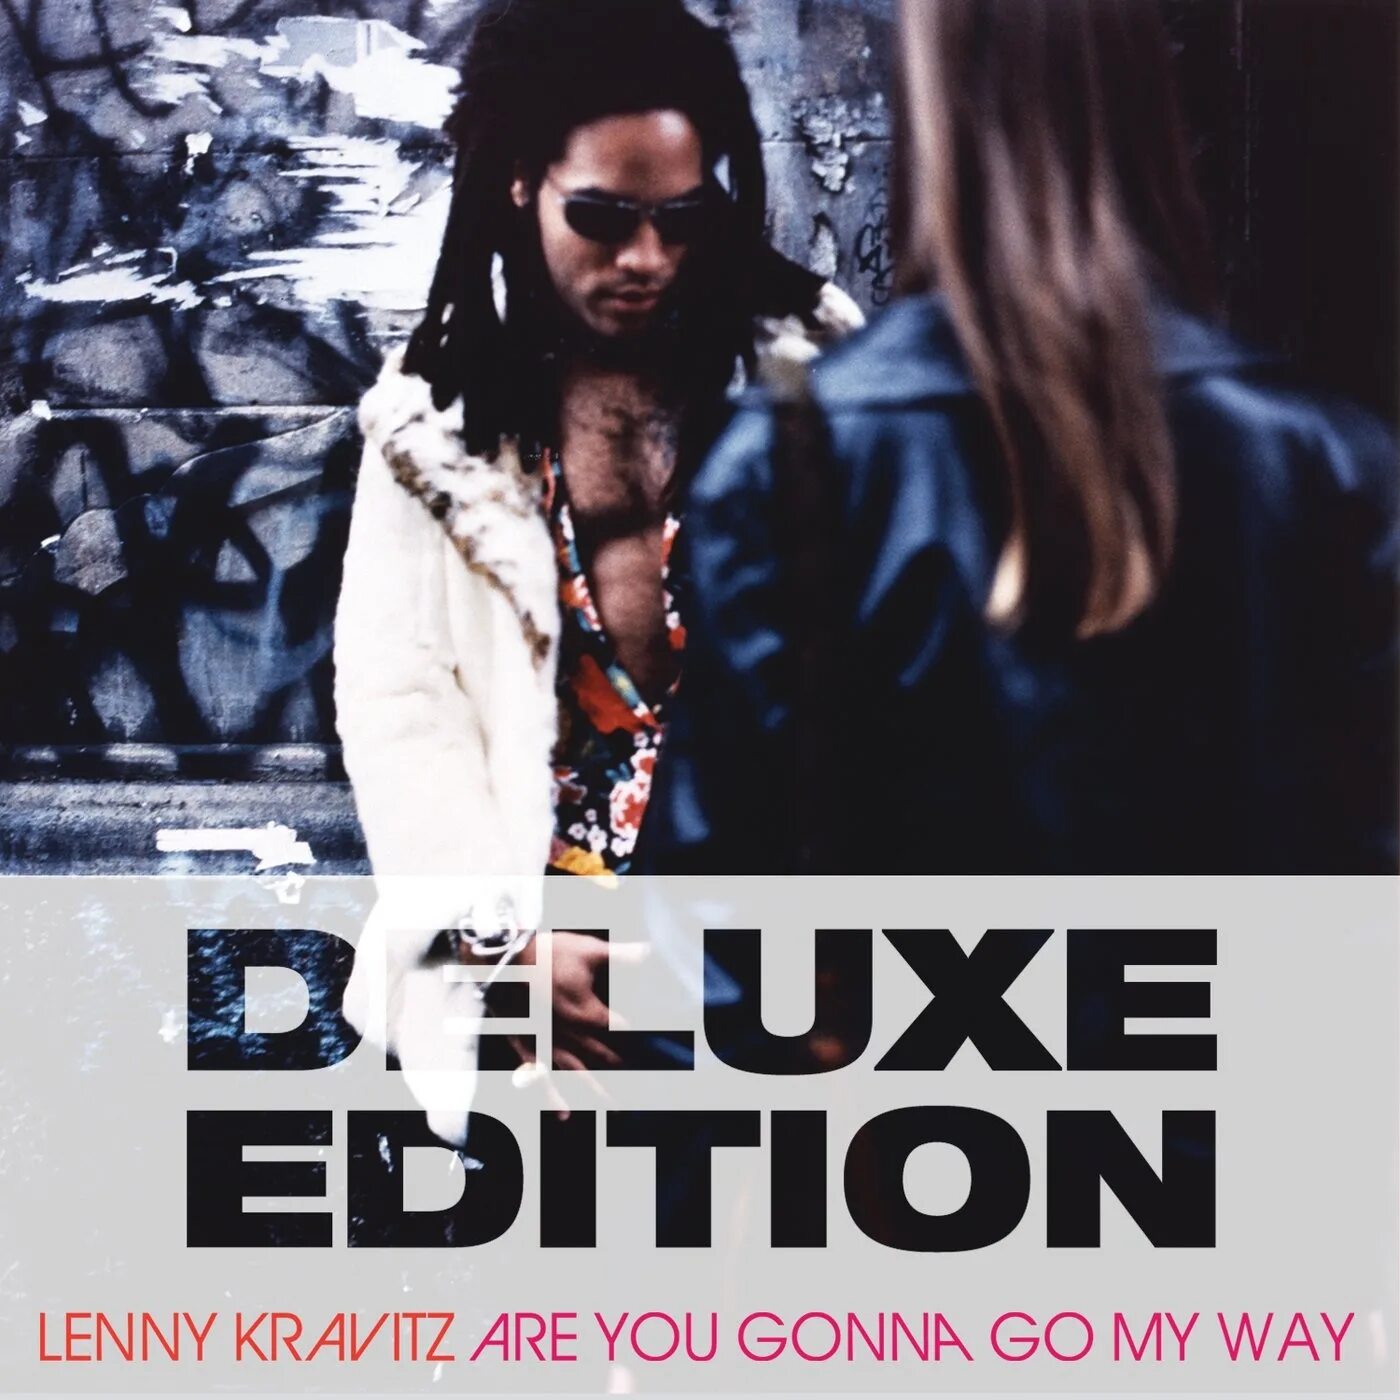 Ленни кравиц альбомы. Lenny Kravitz 1993. Lenny Kravitz 1993 are you gonna go my way. Lenny Kravitz обложки альбомов. Ленни Кравиц 1993 альбом.